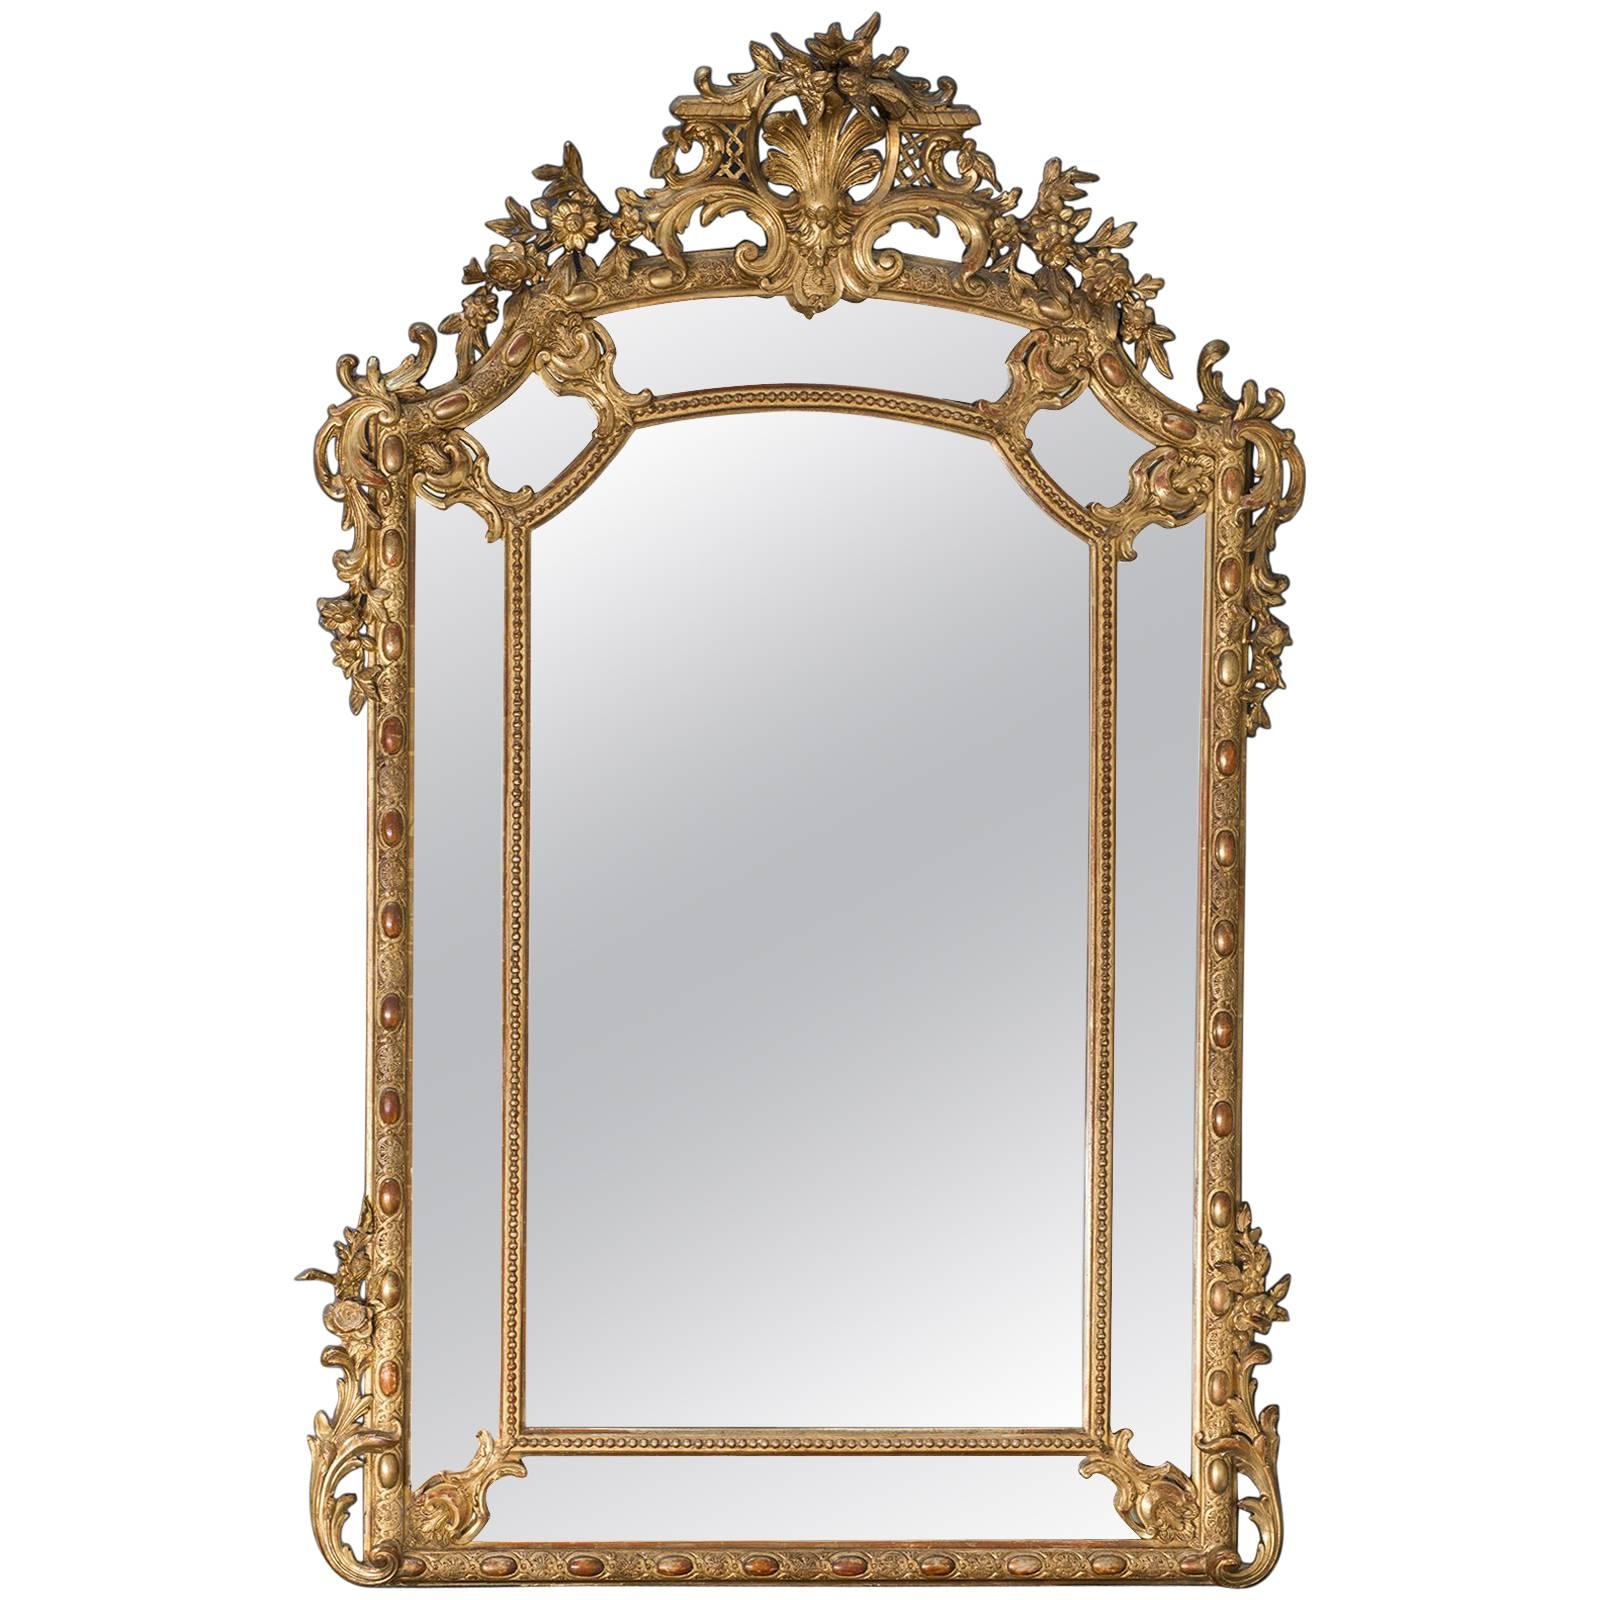 Large Antique French Gold Leaf Pareclose Mirror, circa 1890